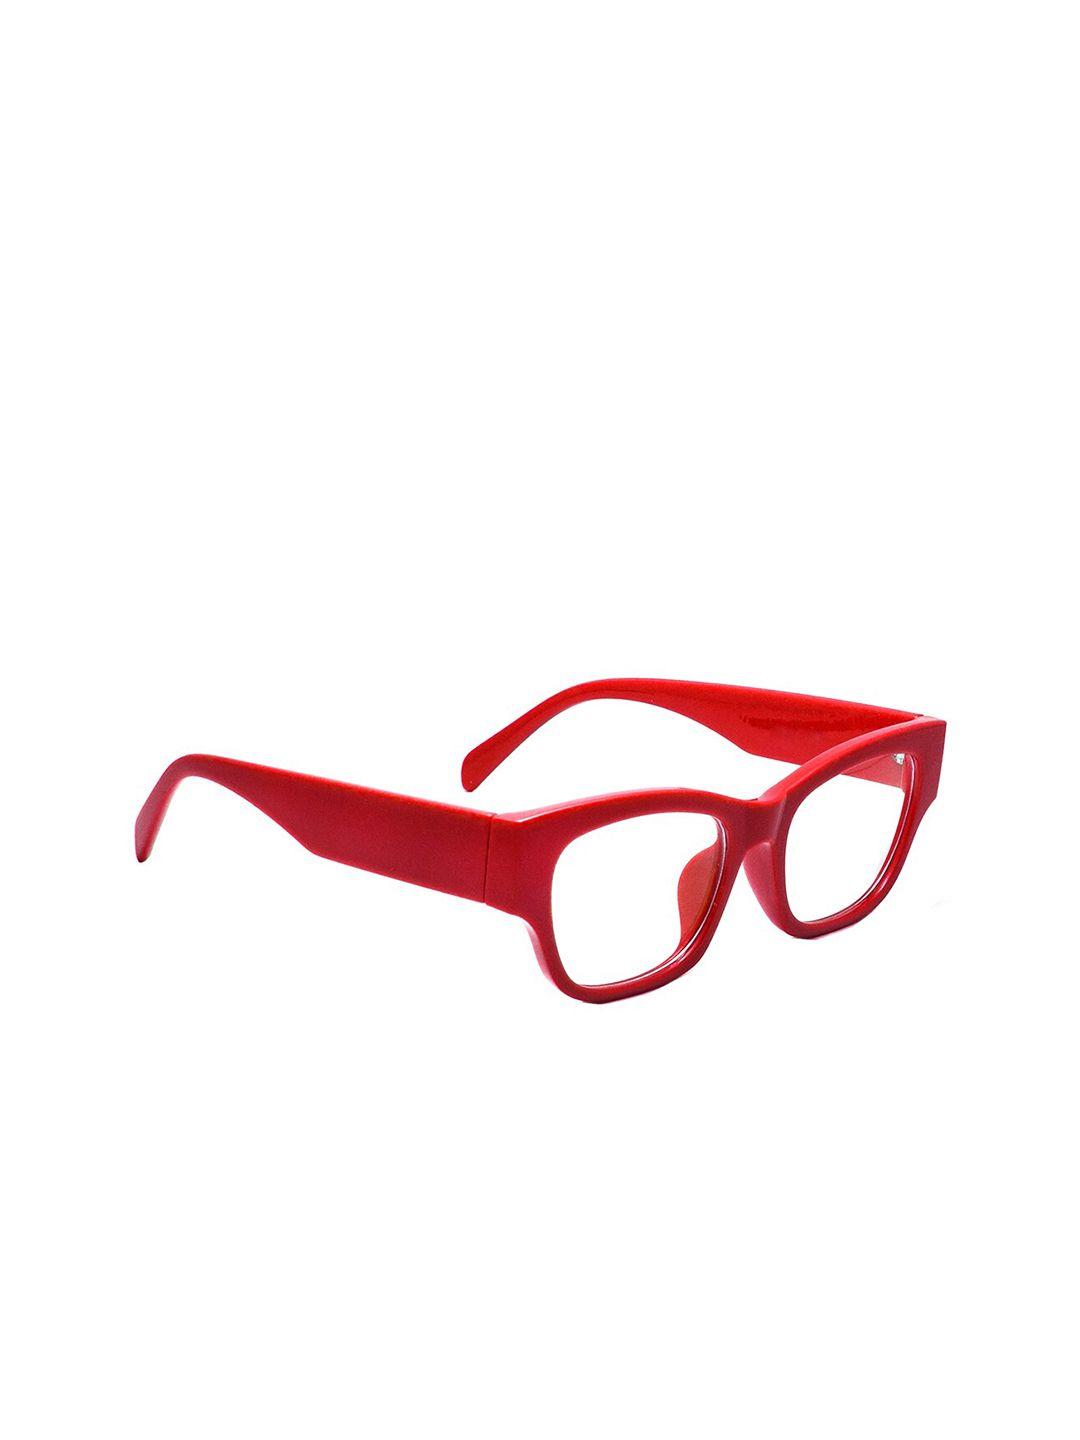 peter jones eyewear women red full rim cateye frames